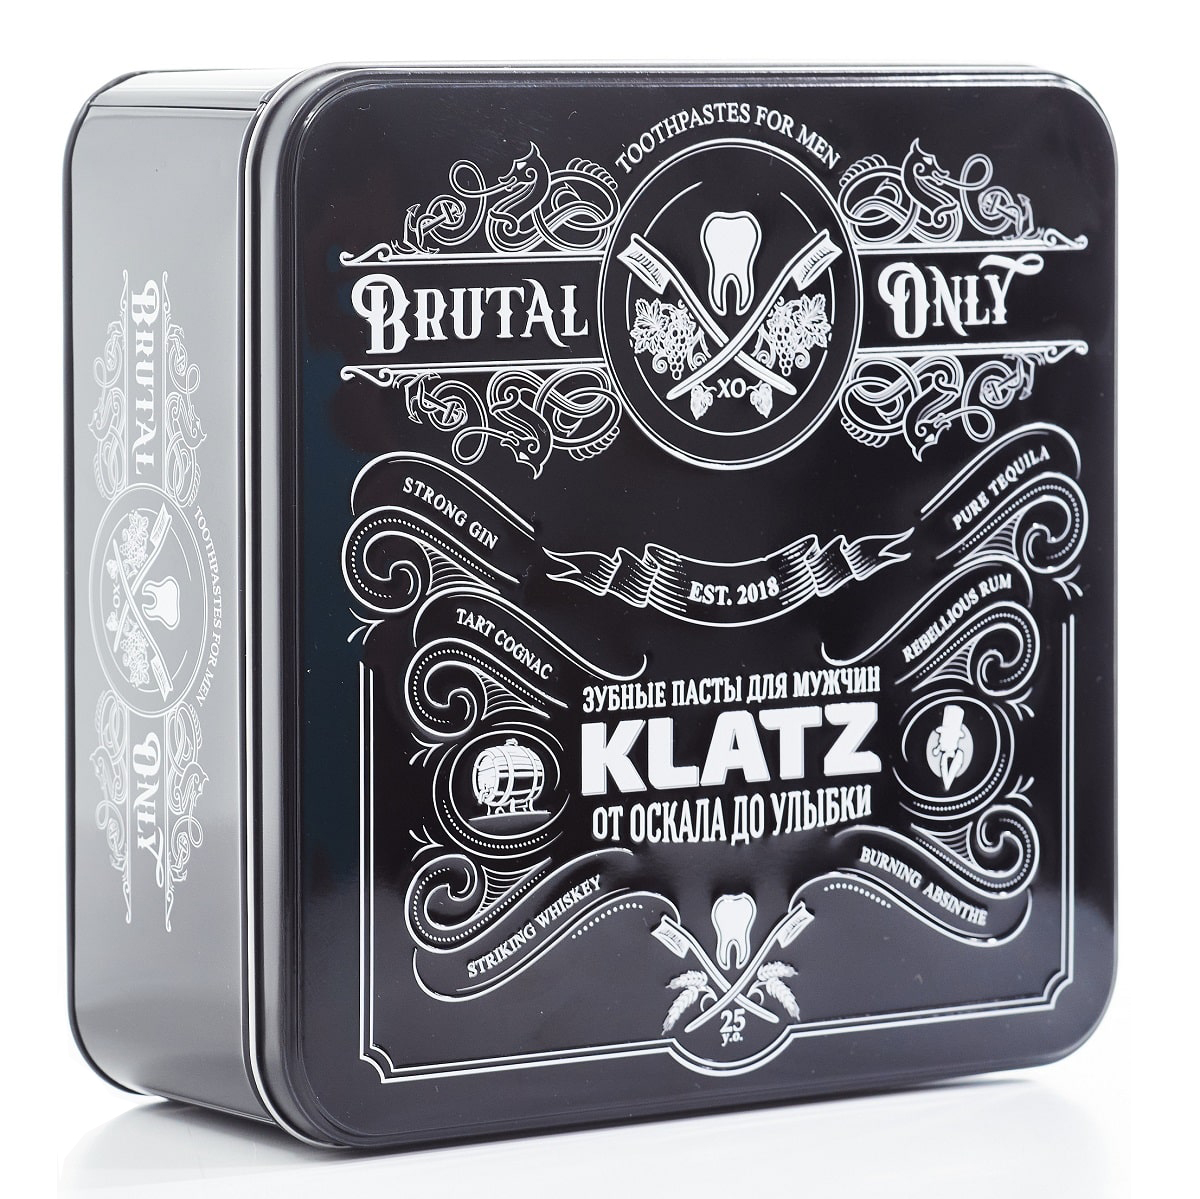 Klatz Набор для мужчин: зубная паста для мужчин 6 вкусов + стеклянный бокал для виски 2 шт (Klatz, Brutal Only)